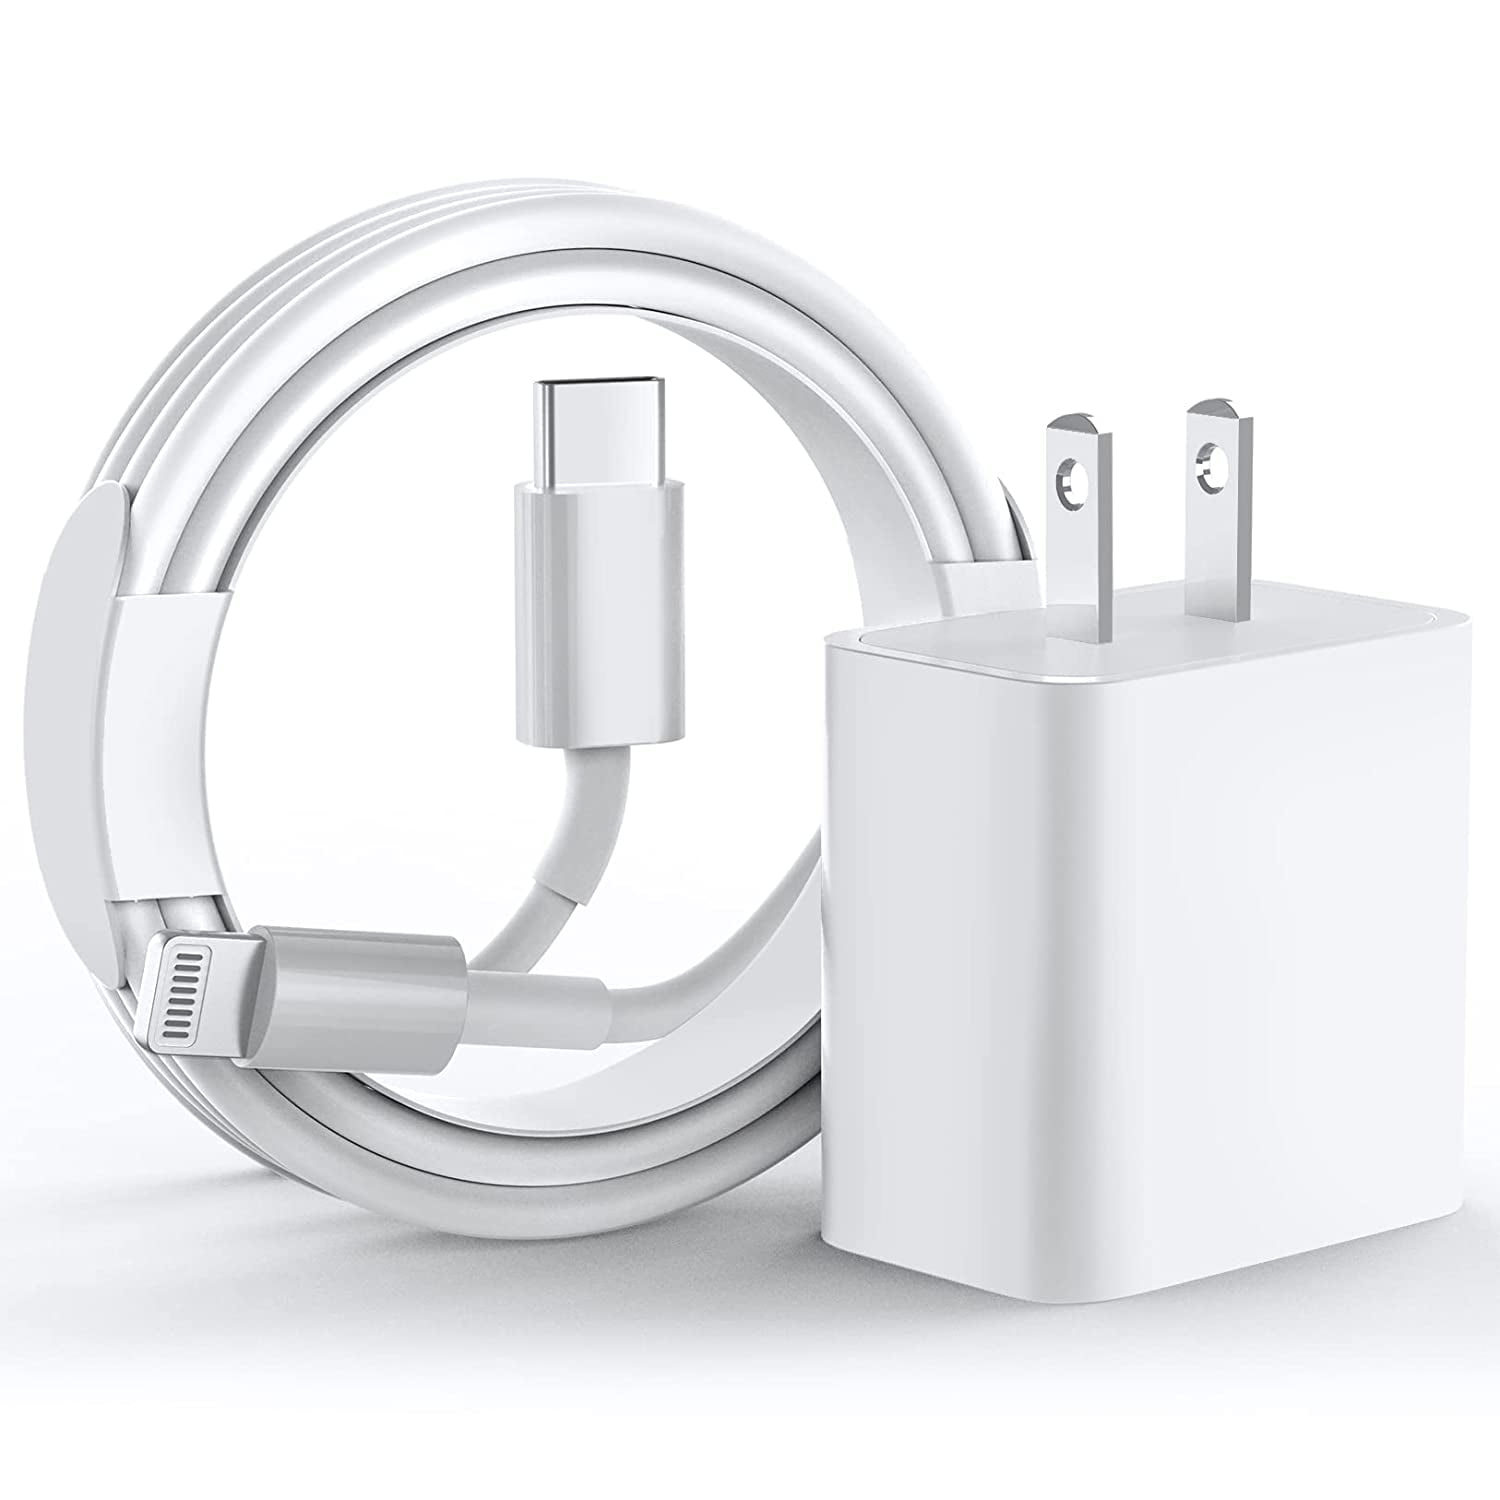 Cargador de iPhone MFI CERTIFIED APPLE carga rápida 20W con puerto tip –  iPC Technology RD